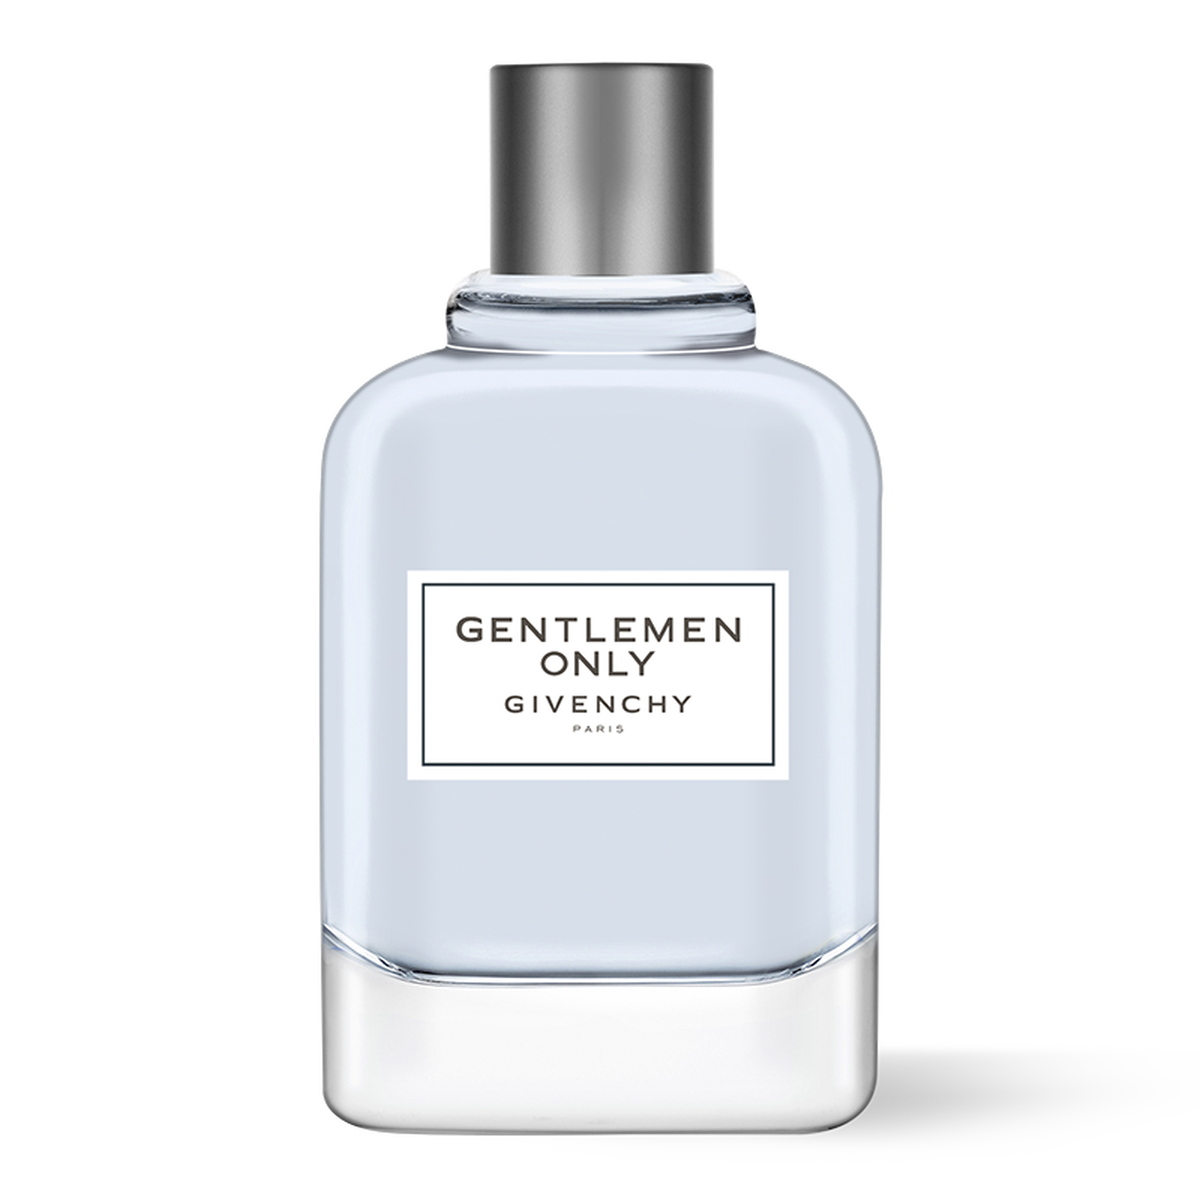 Gentlemen Only - Eau de | Givenchy Beauty toilette